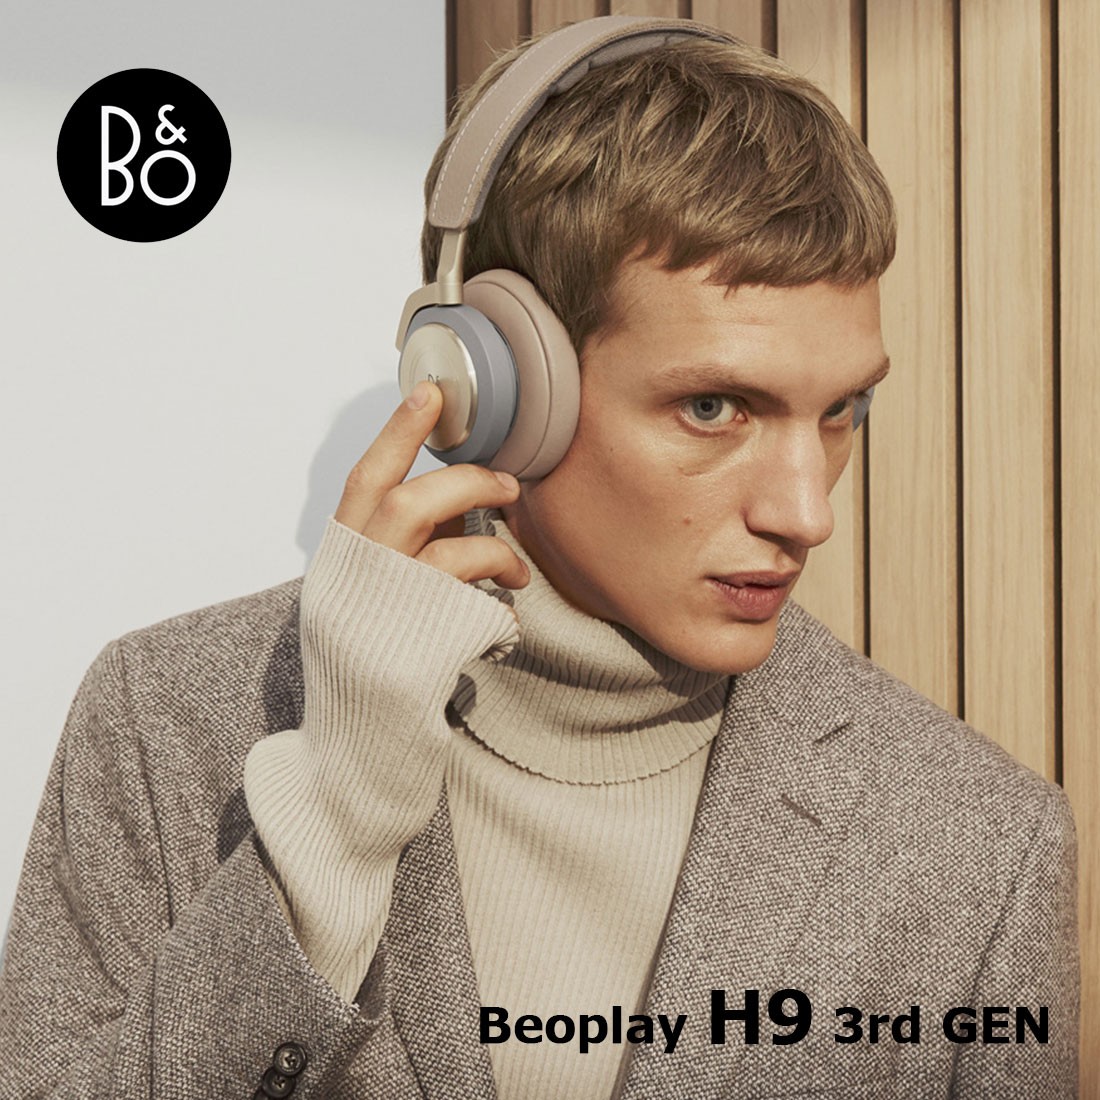 【BANG & OLUFSEN】Beoplay H9 3rd Generation ヘッドホン 